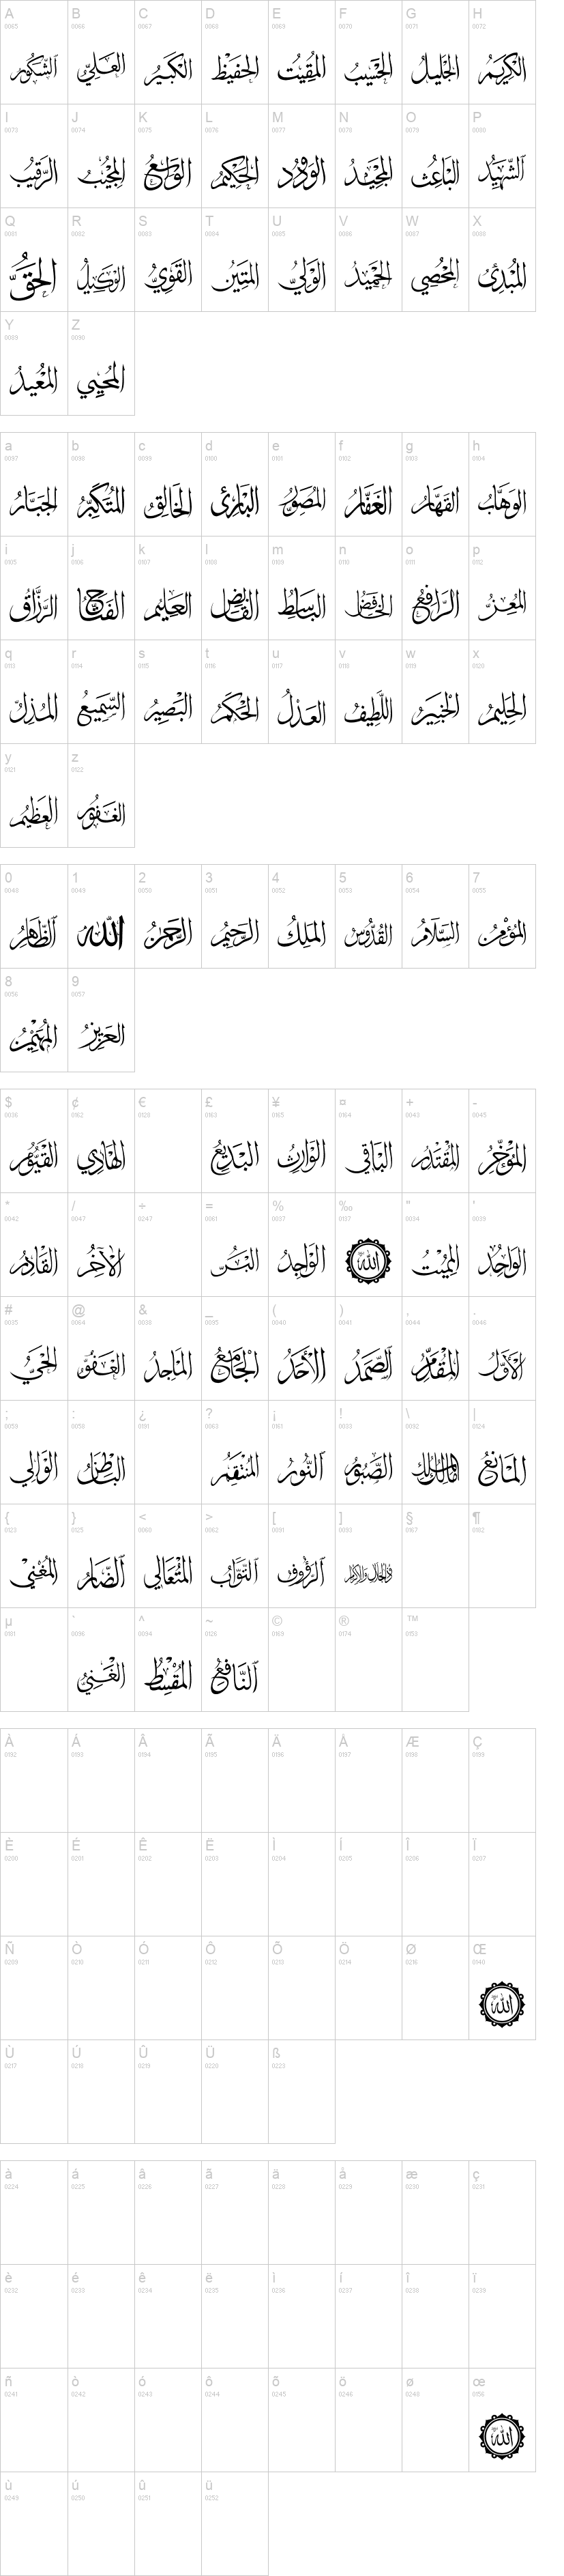 Allah Names